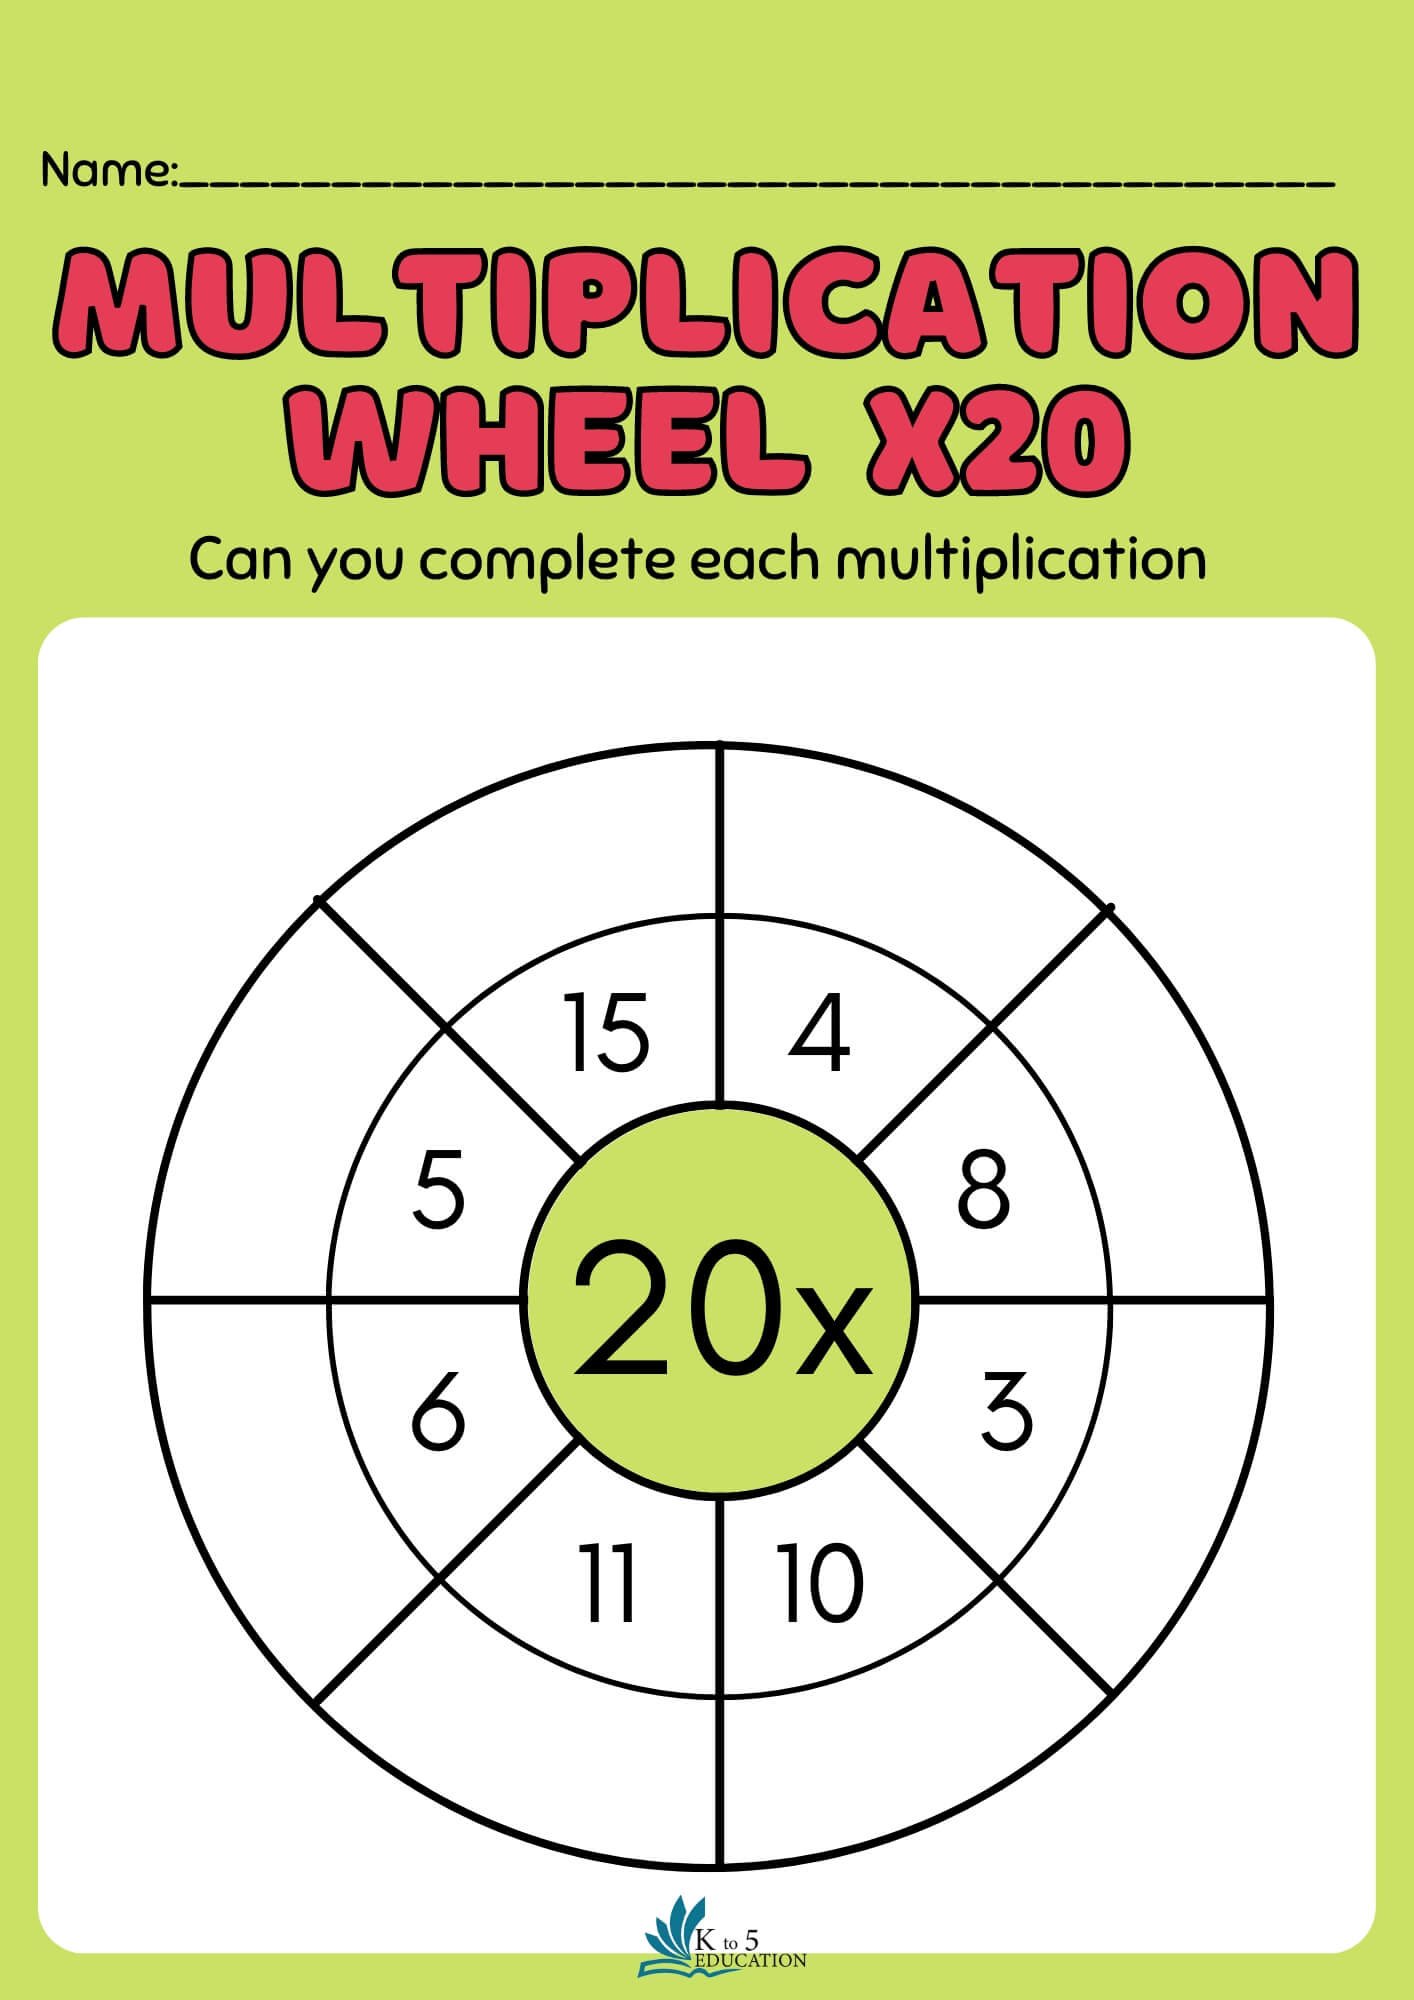 Multiplication Wheel x20